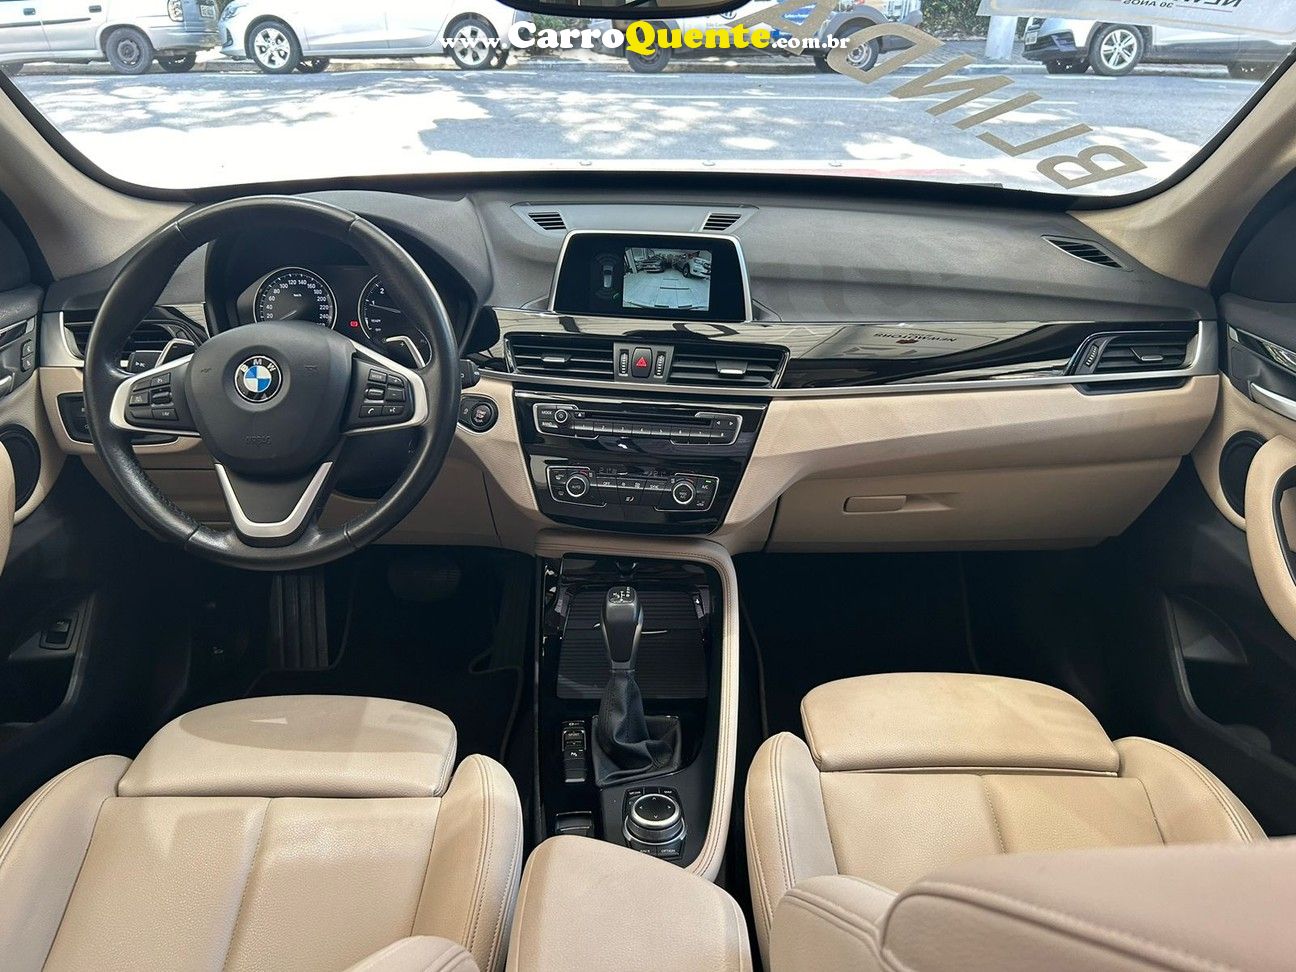 BMW X1 2.0 16V TURBO ACTIVE SDRIVE20I 4P - Loja